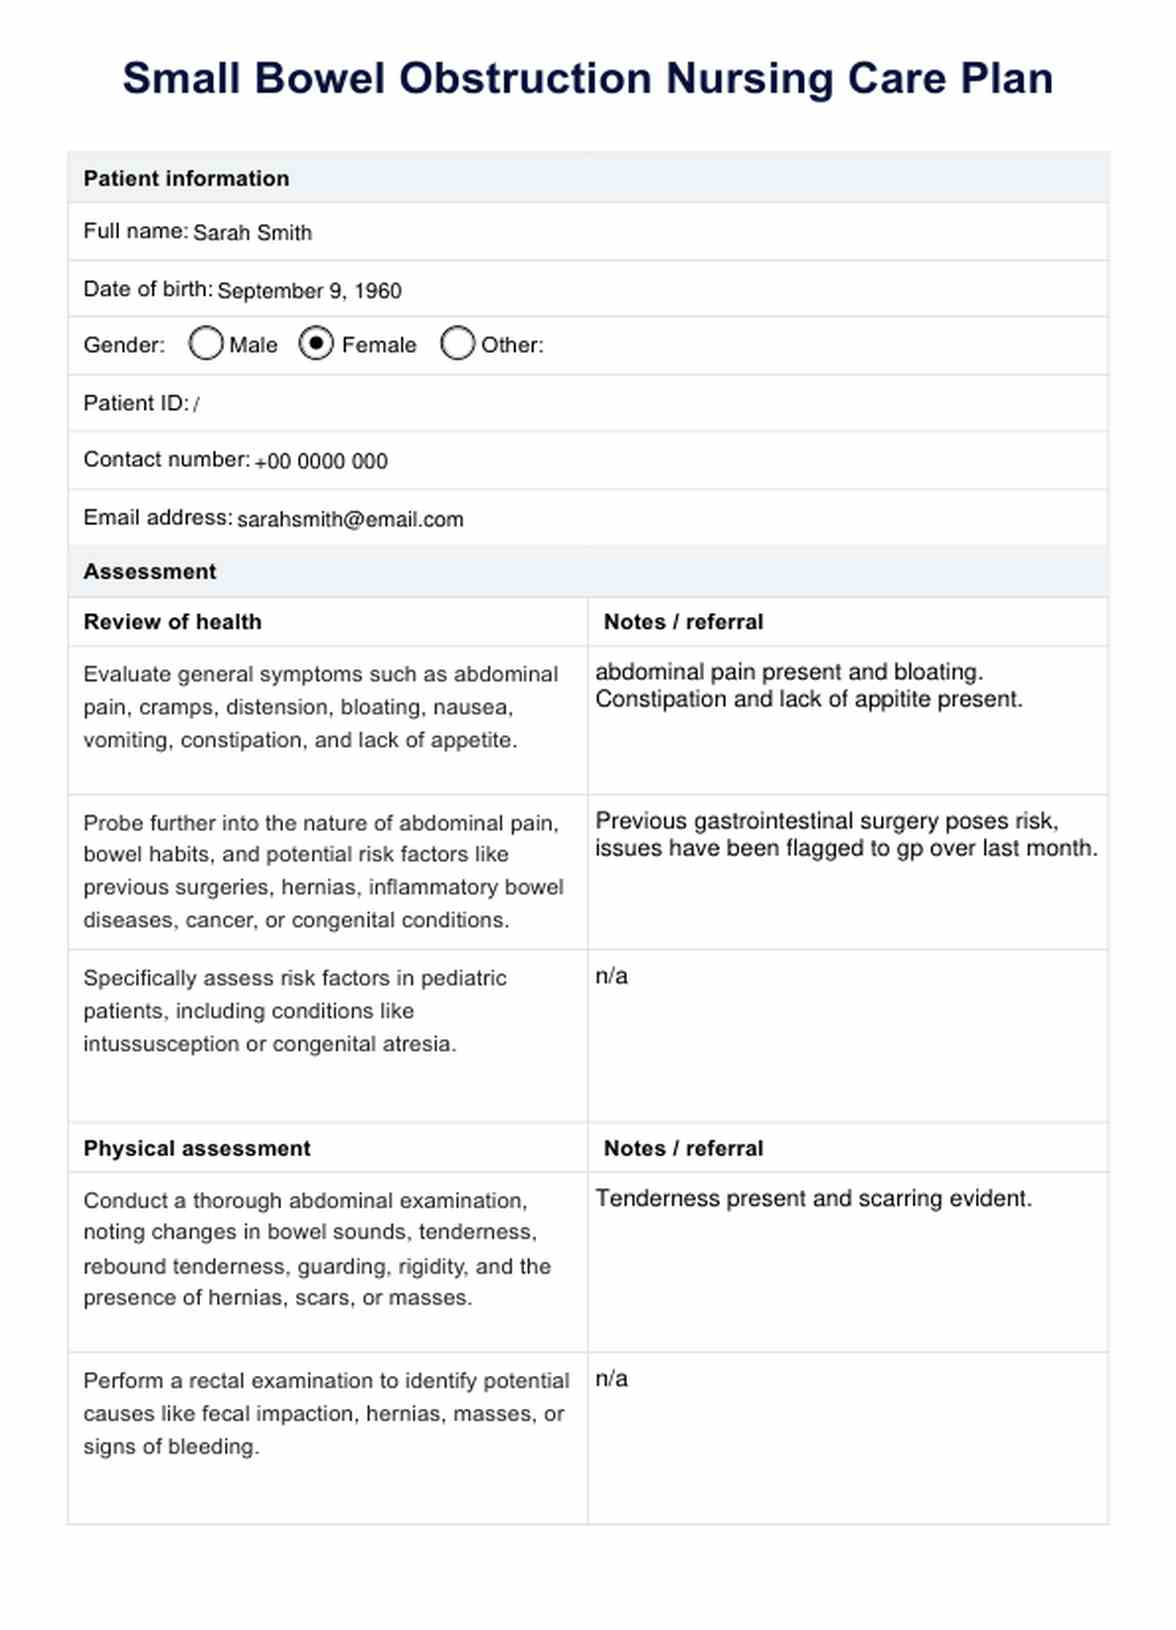 Small Bowel Obstruction Nursing Care Plan PDF Example